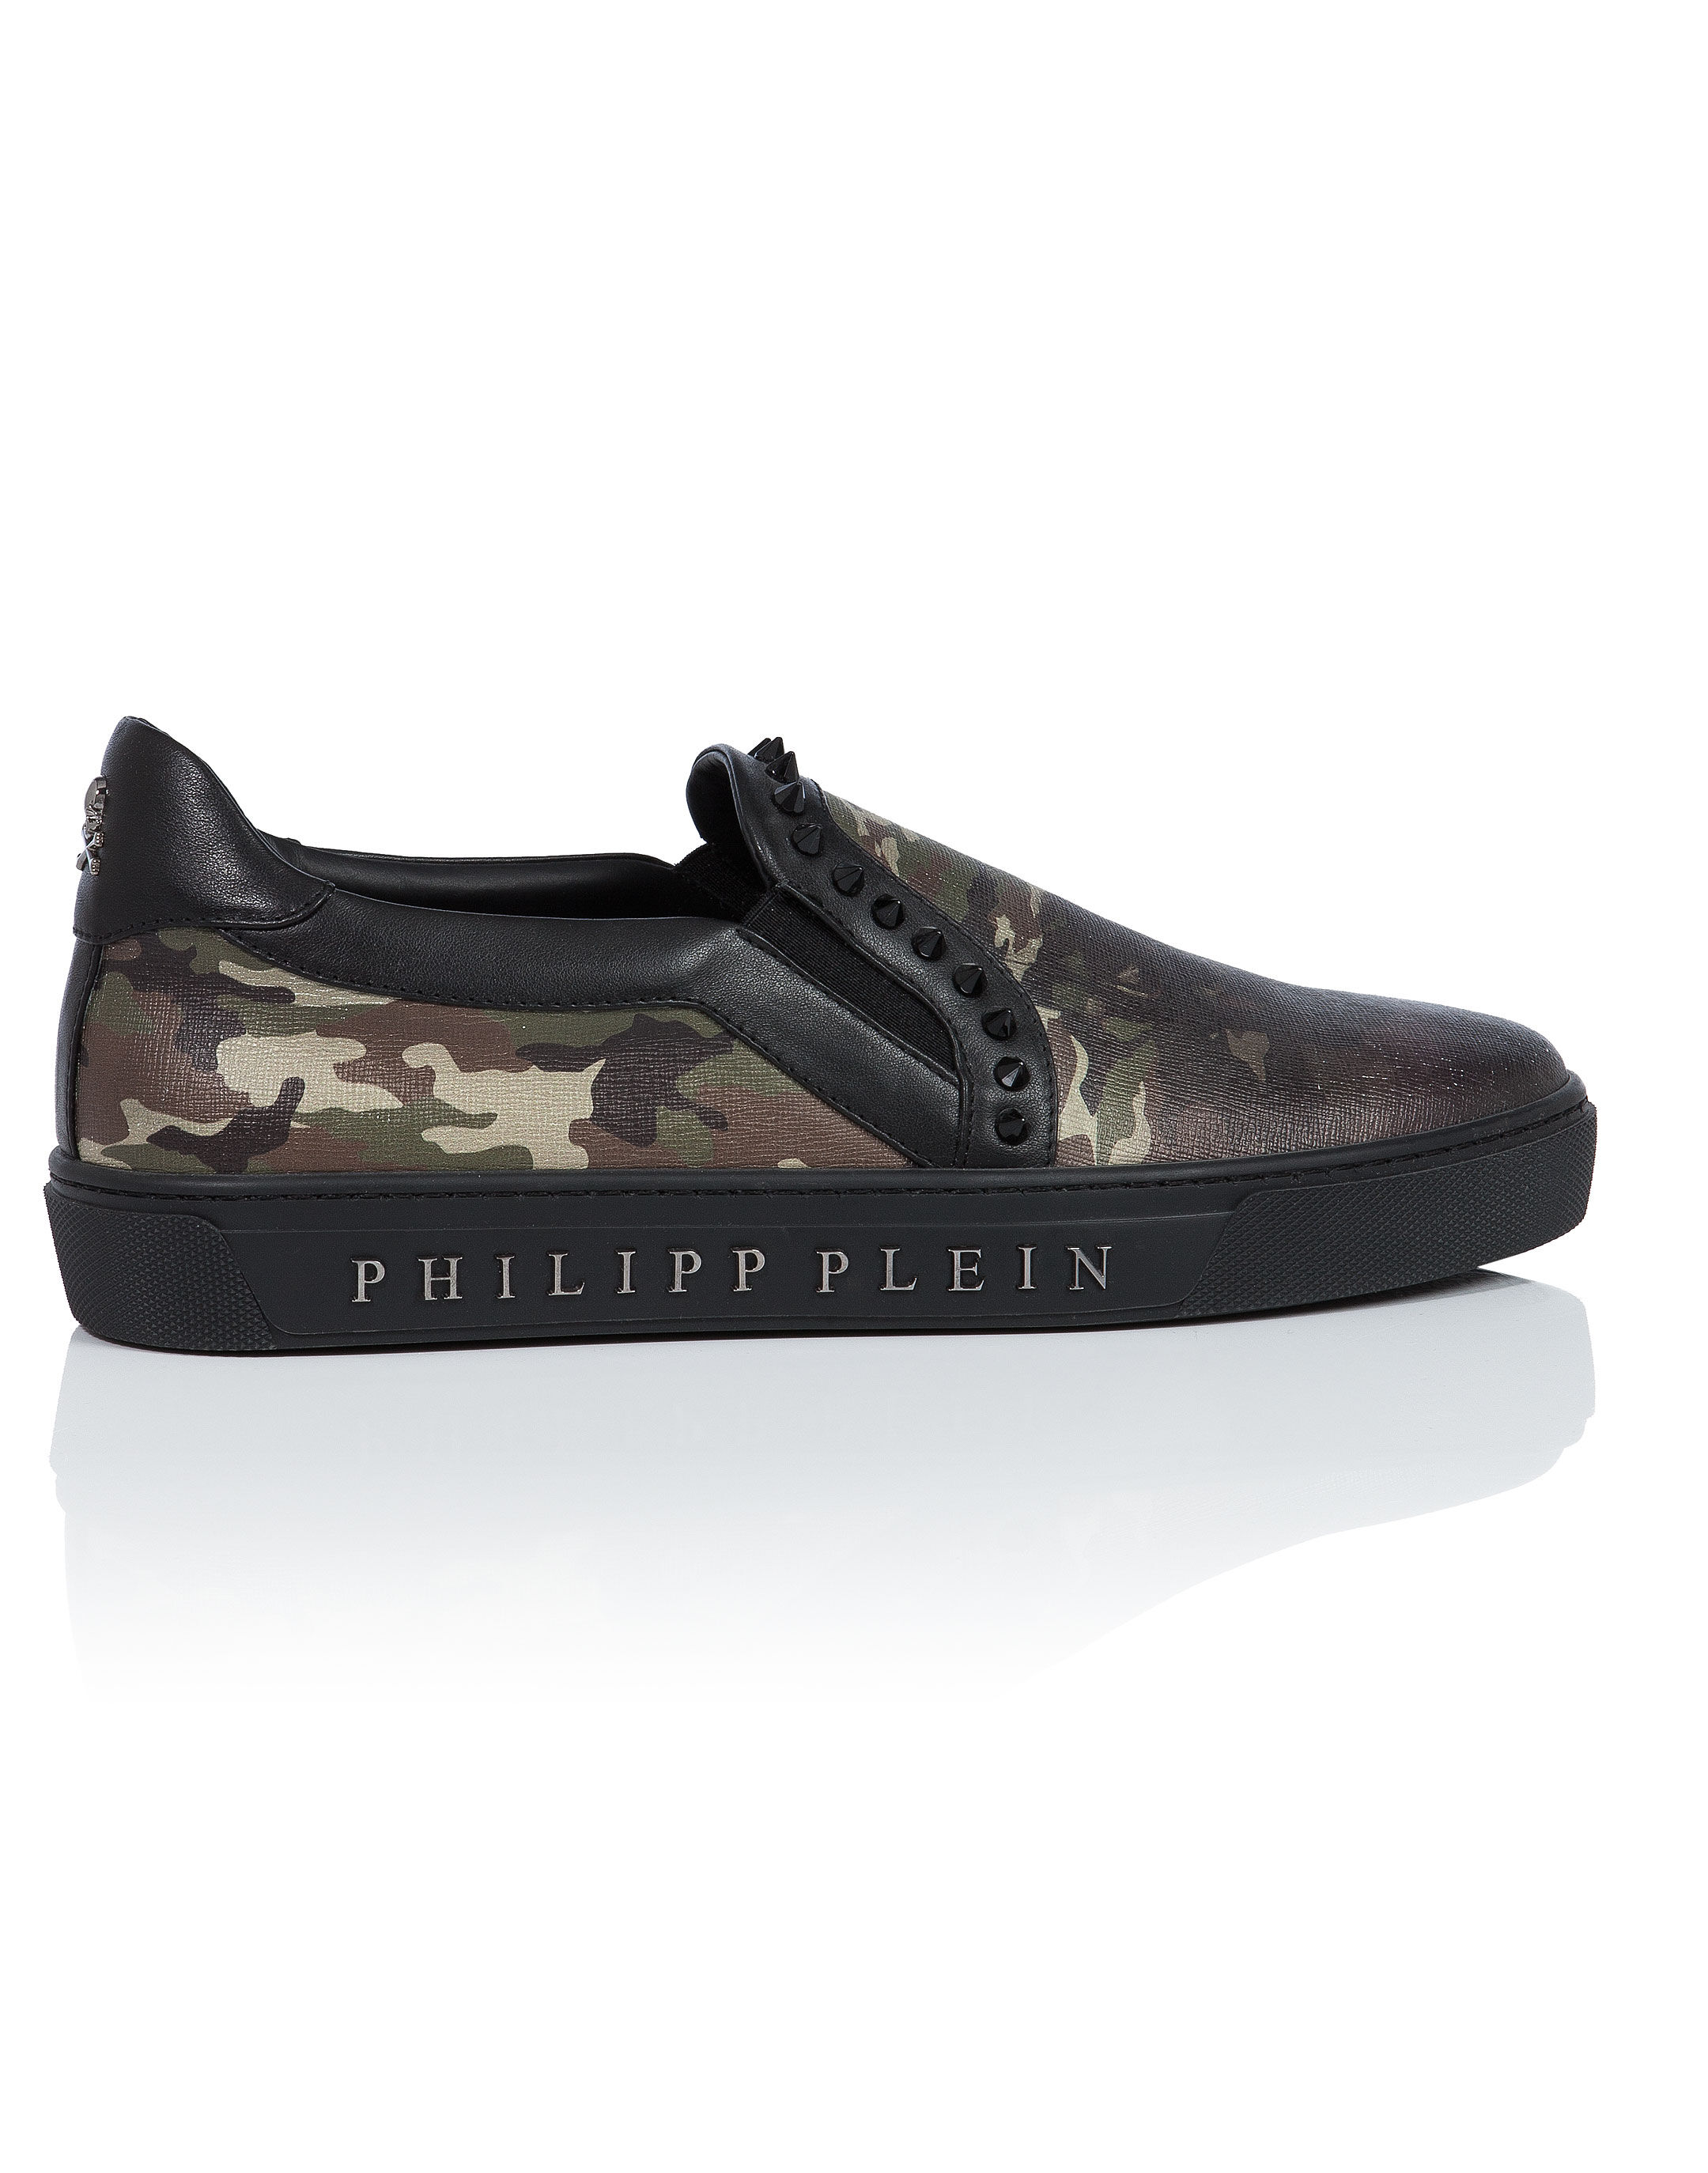 philipp plein slip on sneakers